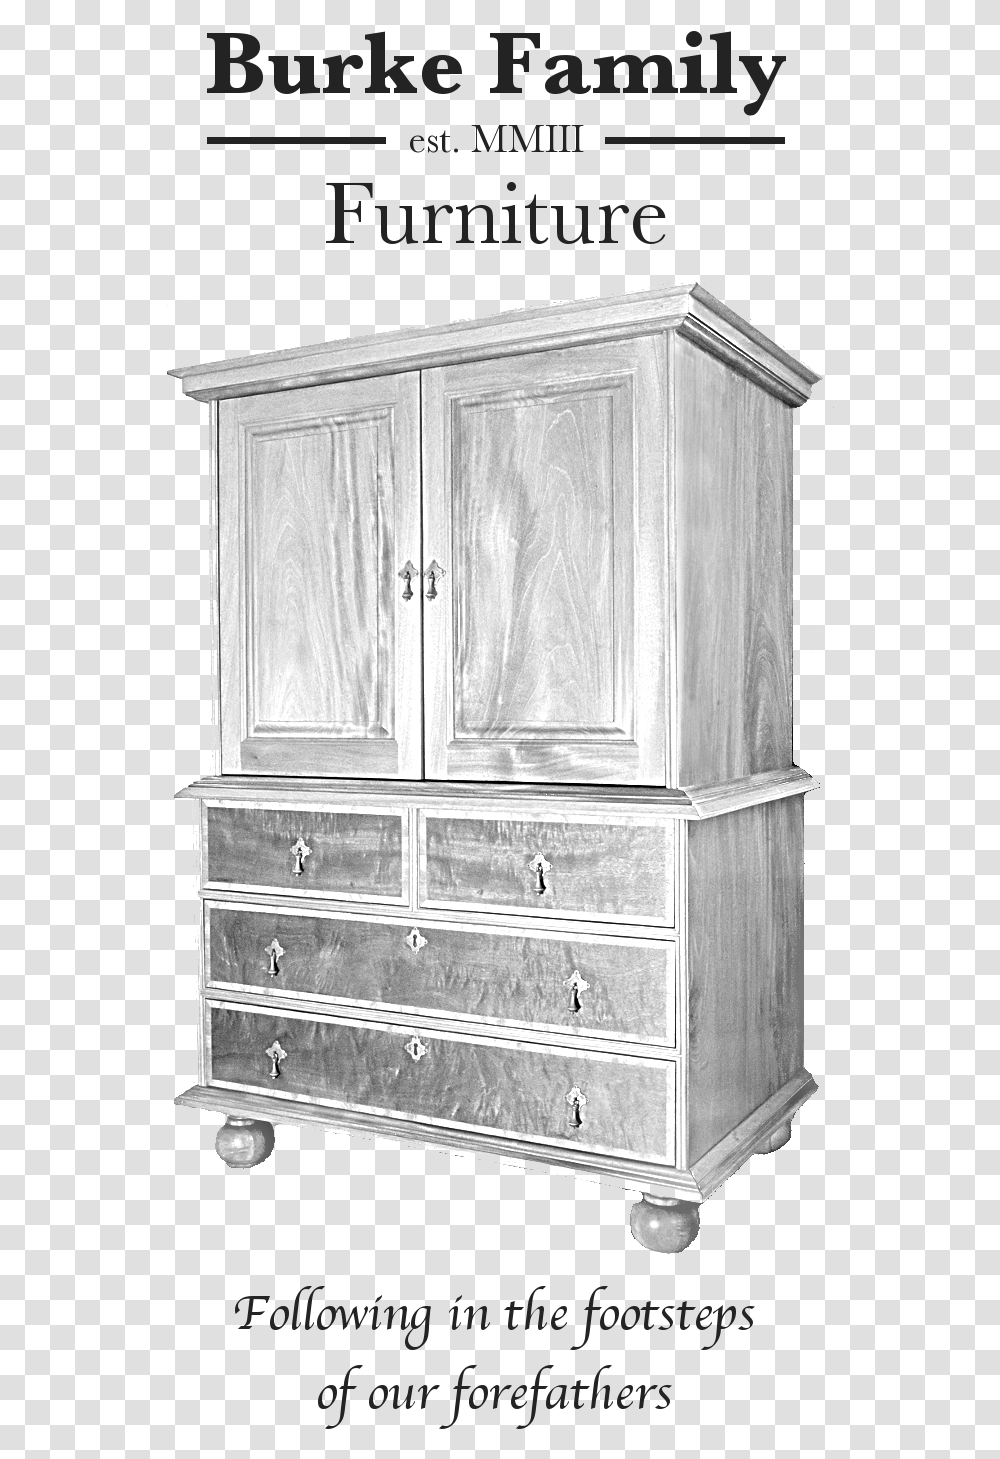 Burke Family Furniture Logo, Cupboard, Closet, Cabinet, Dresser Transparent Png